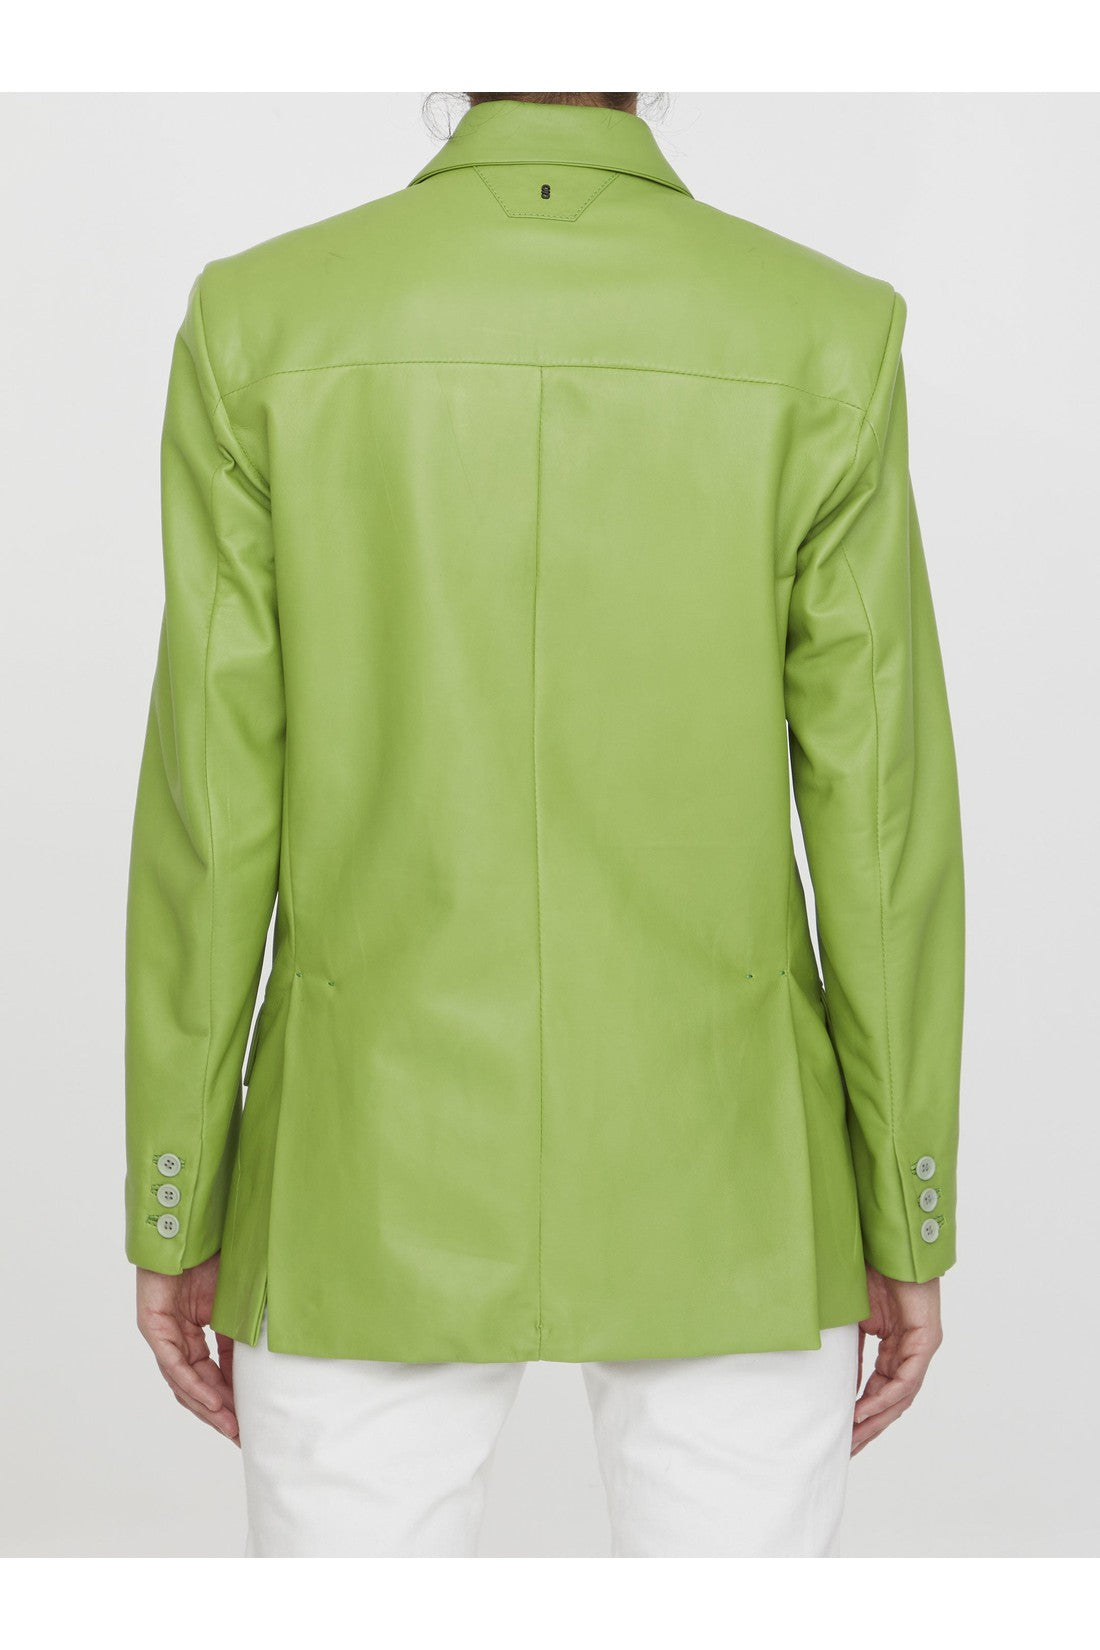 Lime leather jacket